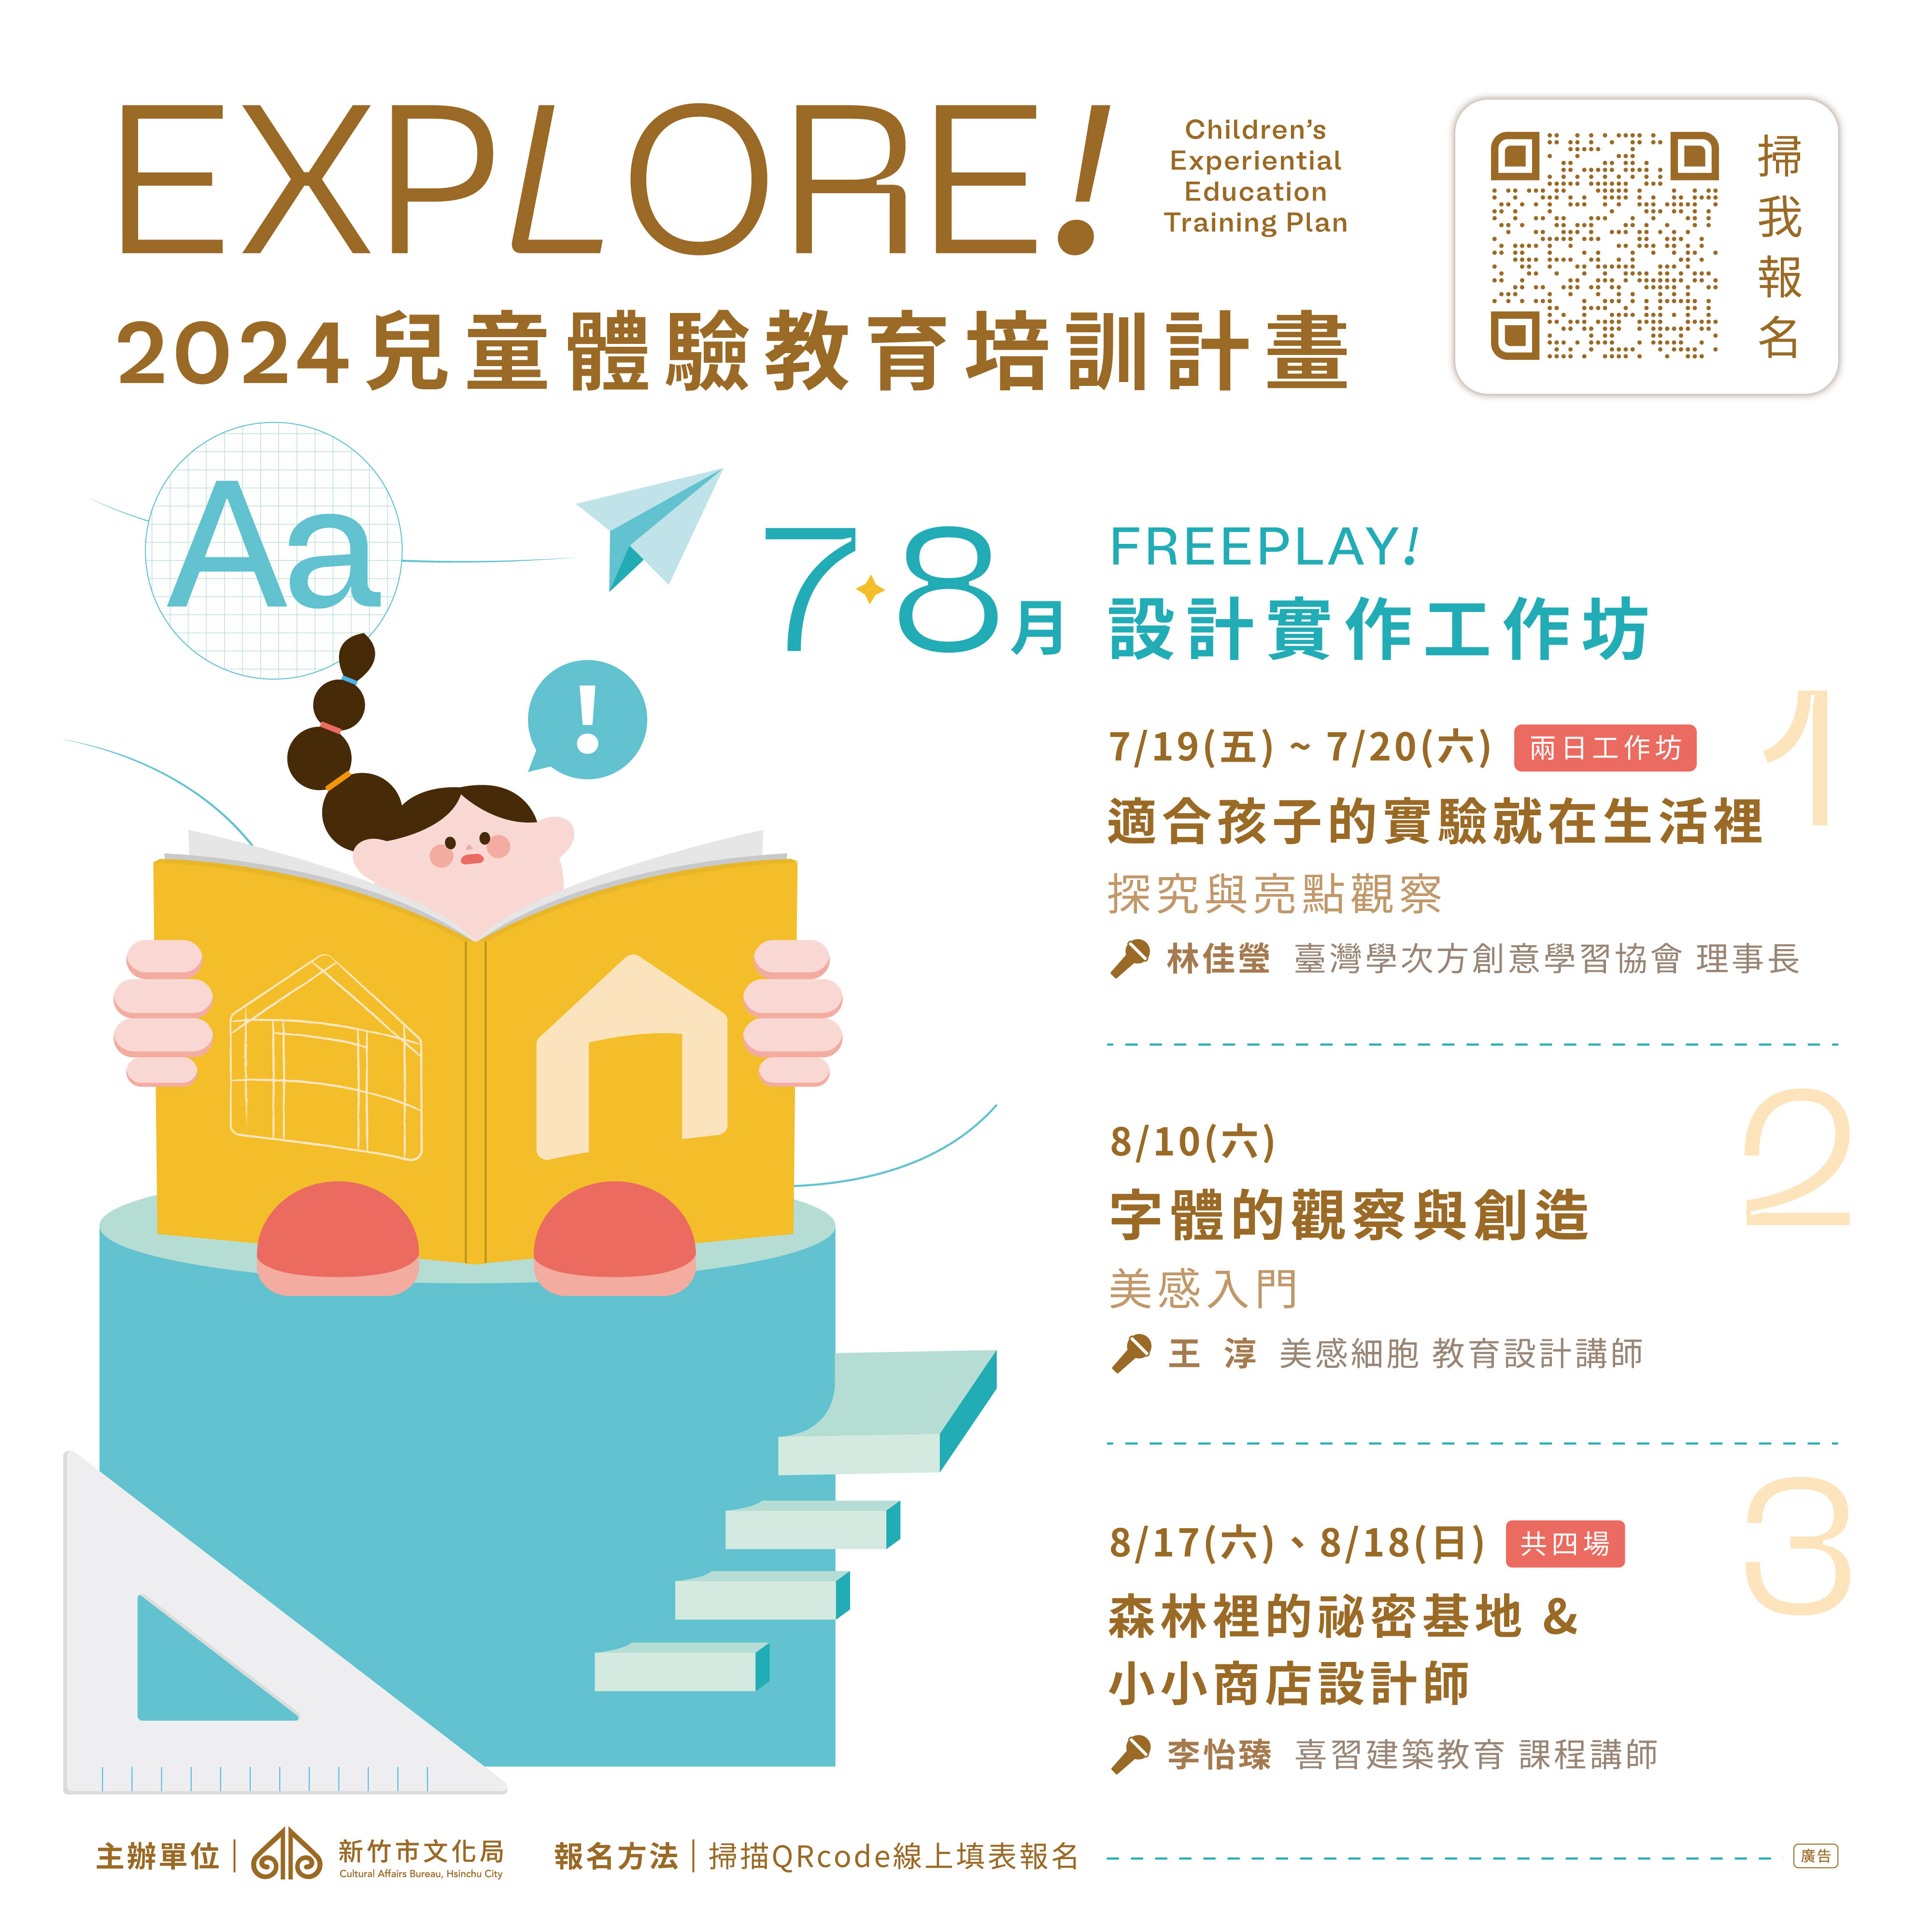 《2024 Explore!兒童體驗教育培訓計畫》探索系列講座